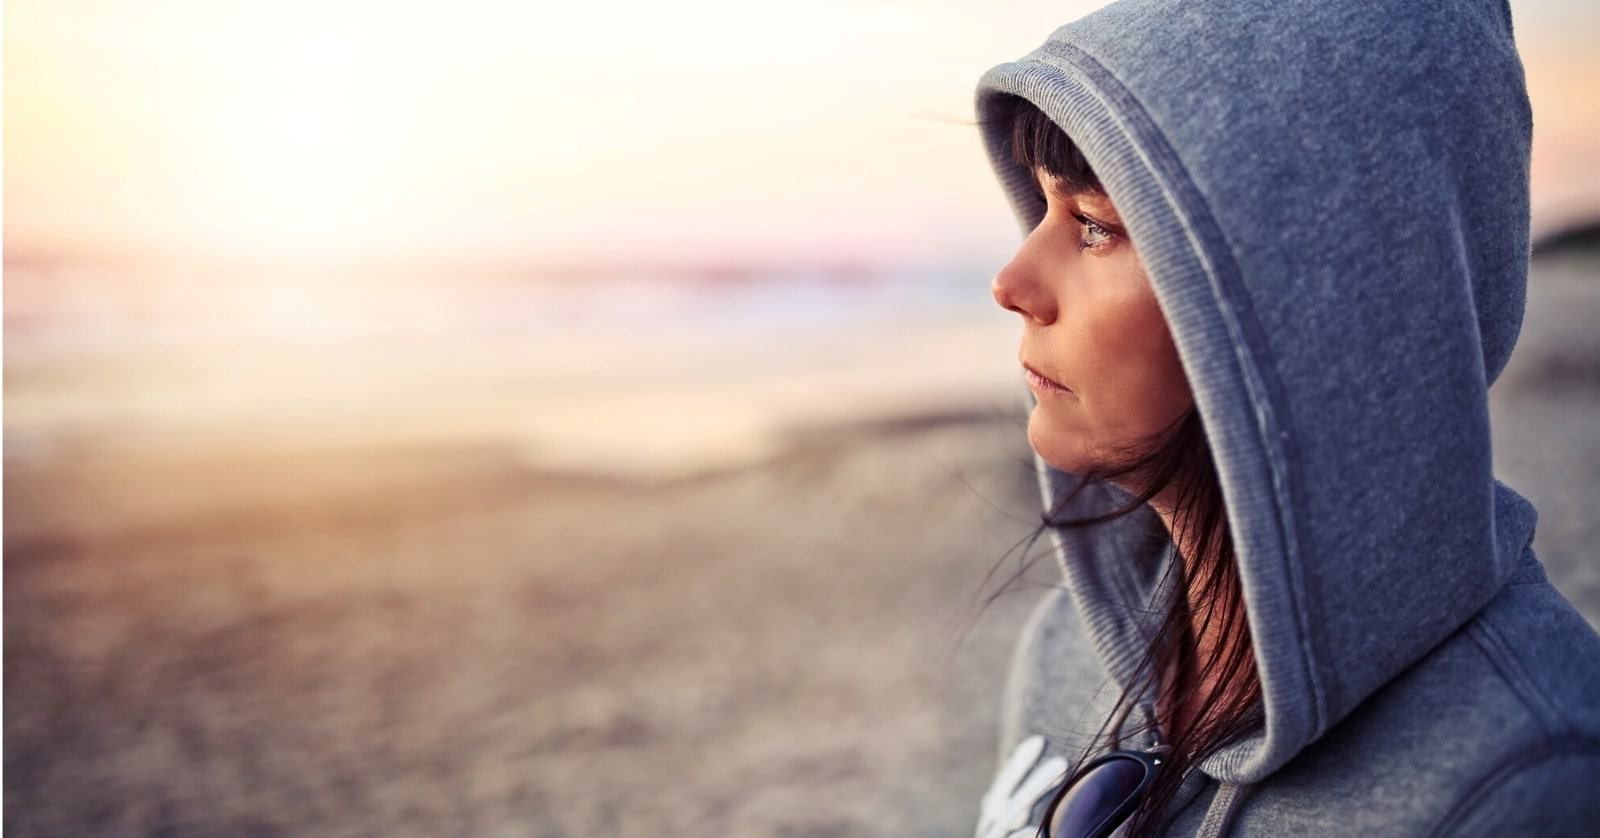 pensive women in a blue hoodie at the beach reflecting on her people-pleasing tendencies